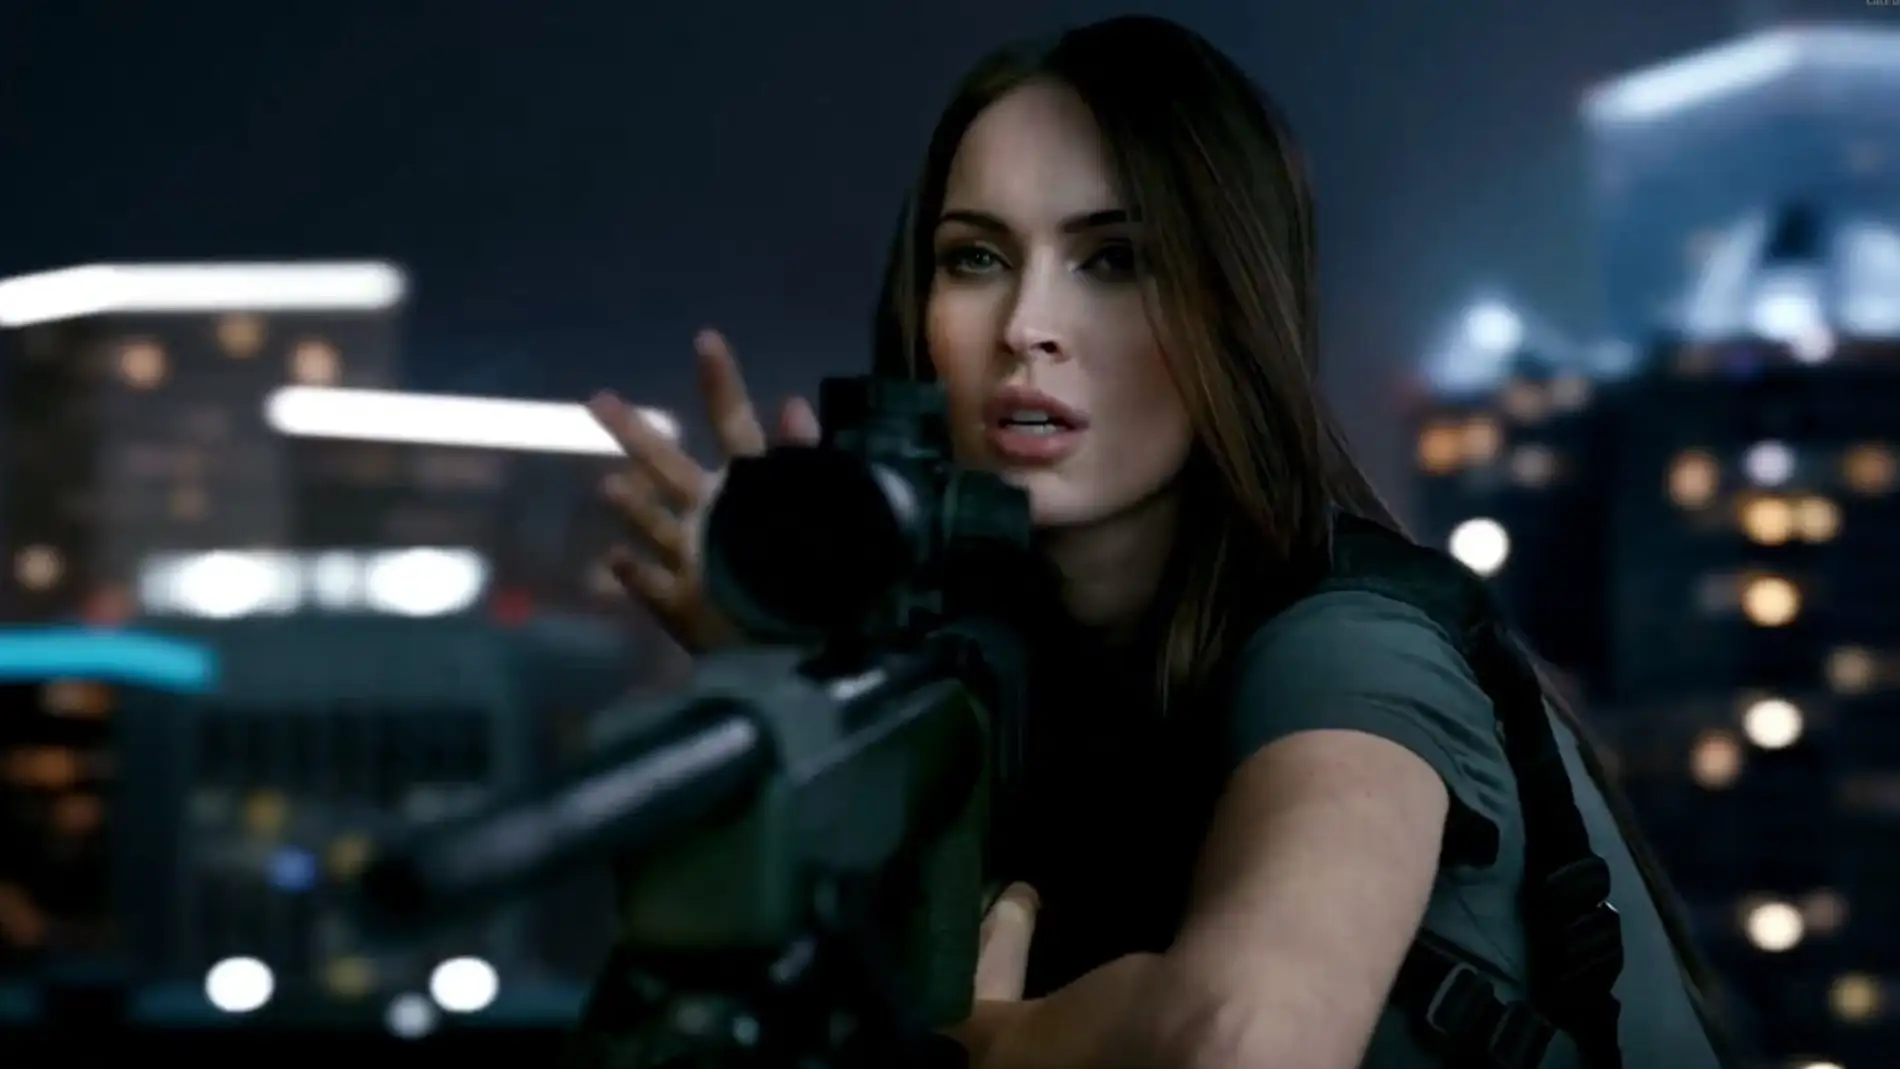 Megan Fox en Call of Duty: Ghosts